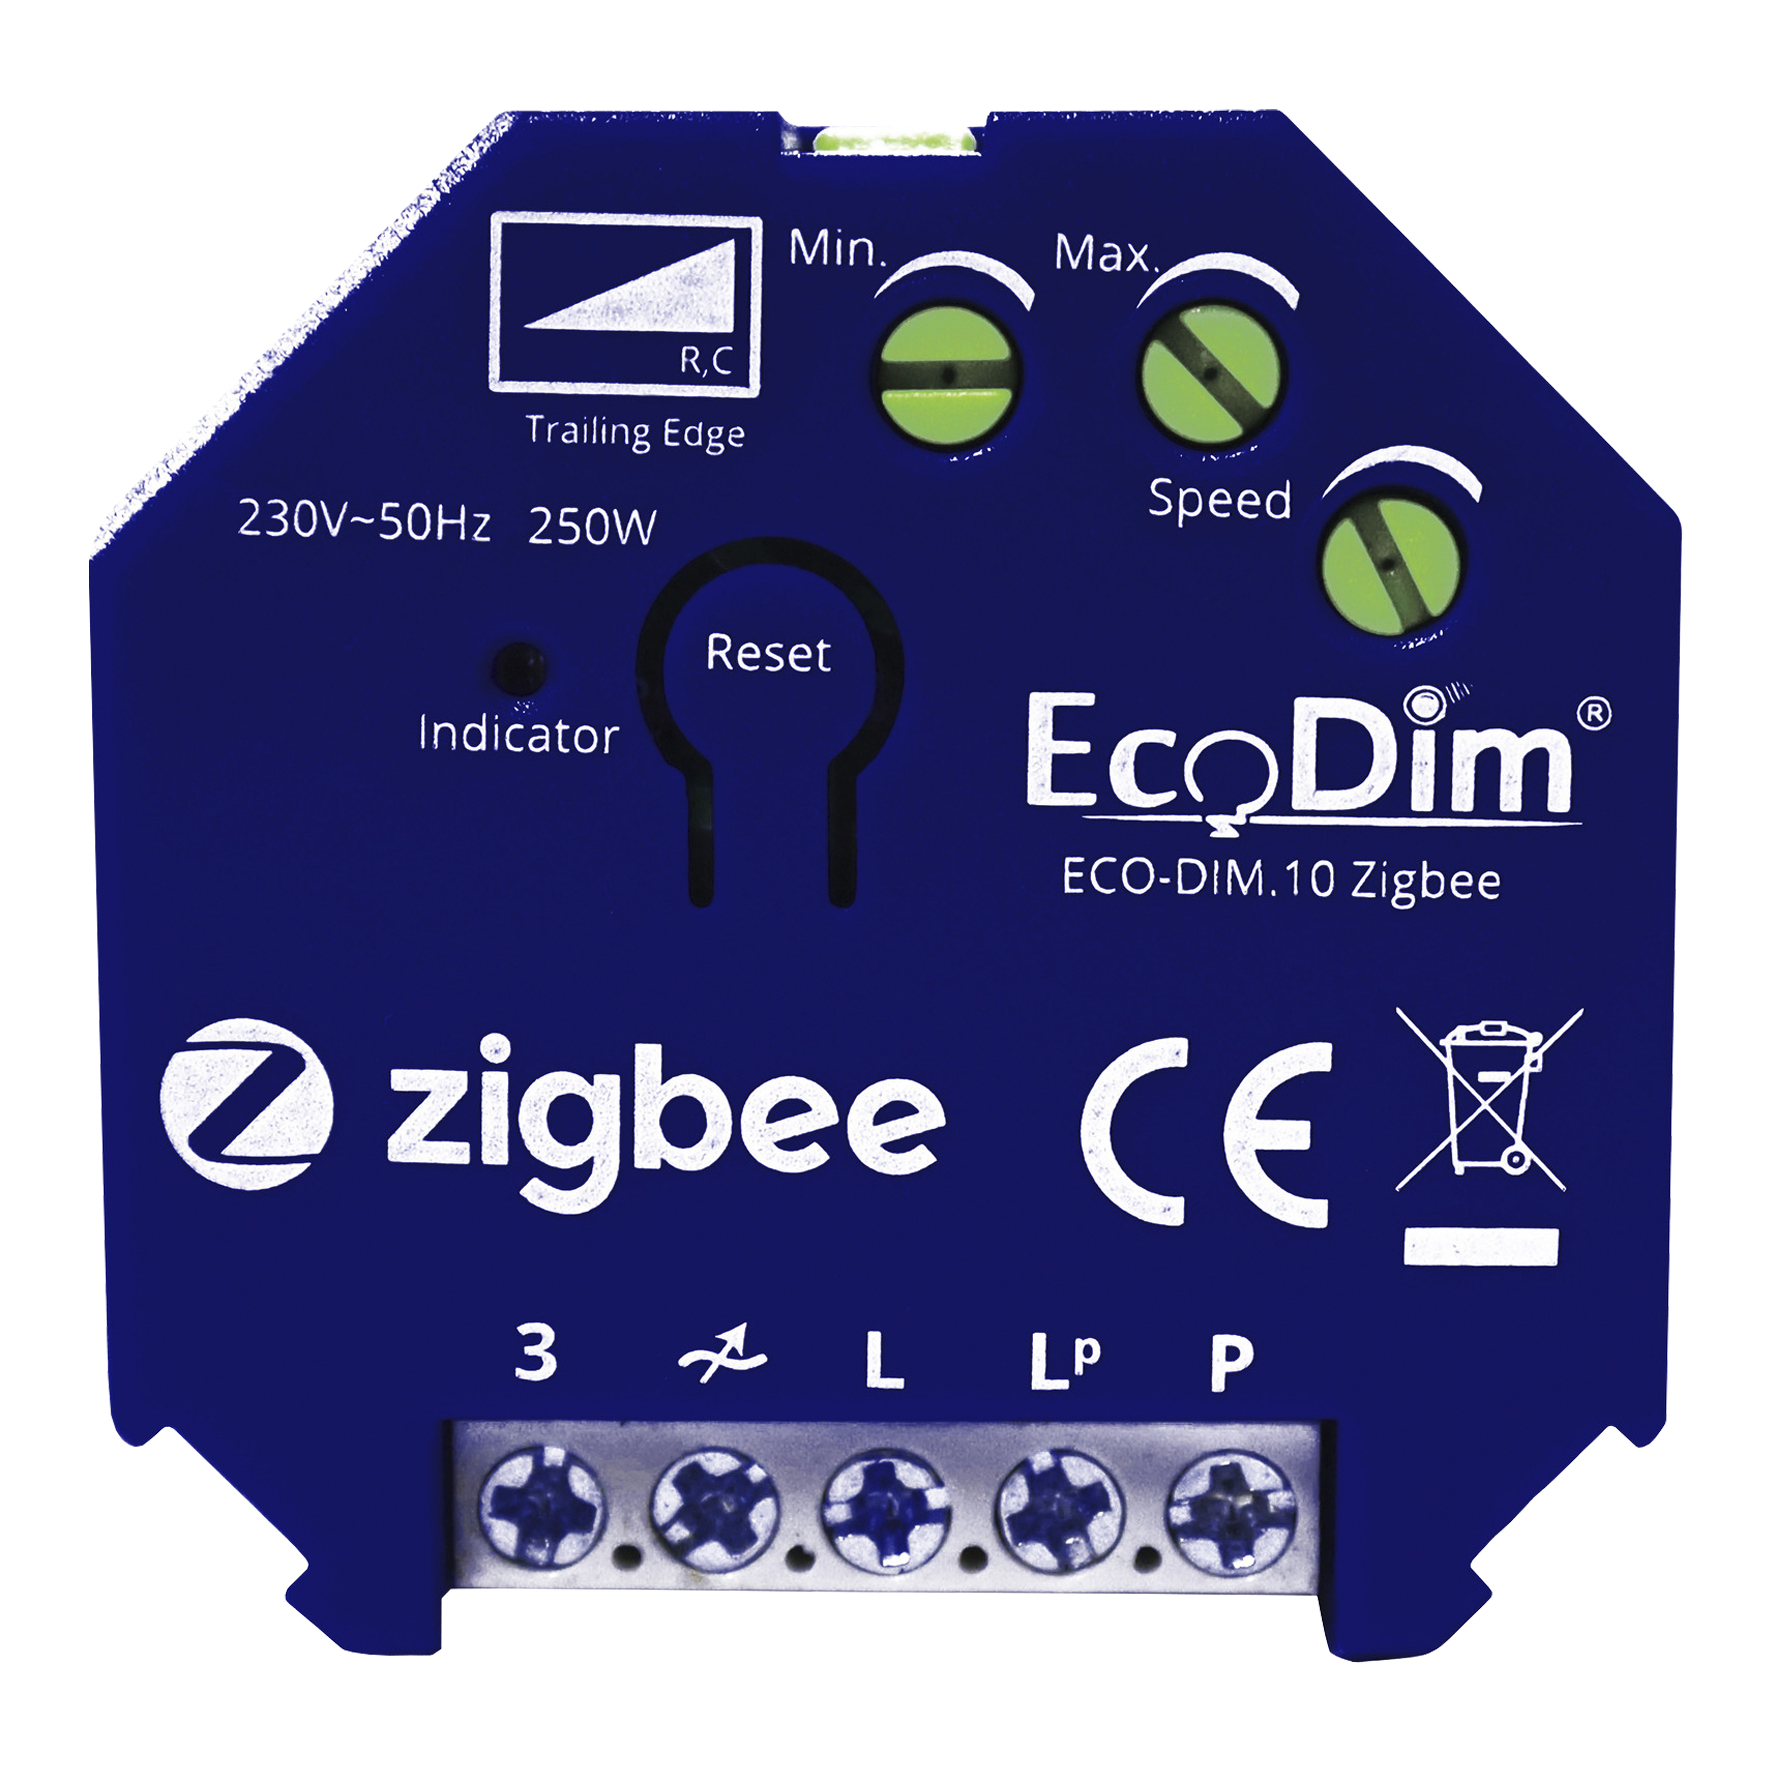 EcoDim ECO-DIM.10 Zigbee LED Dimmer Module 250W